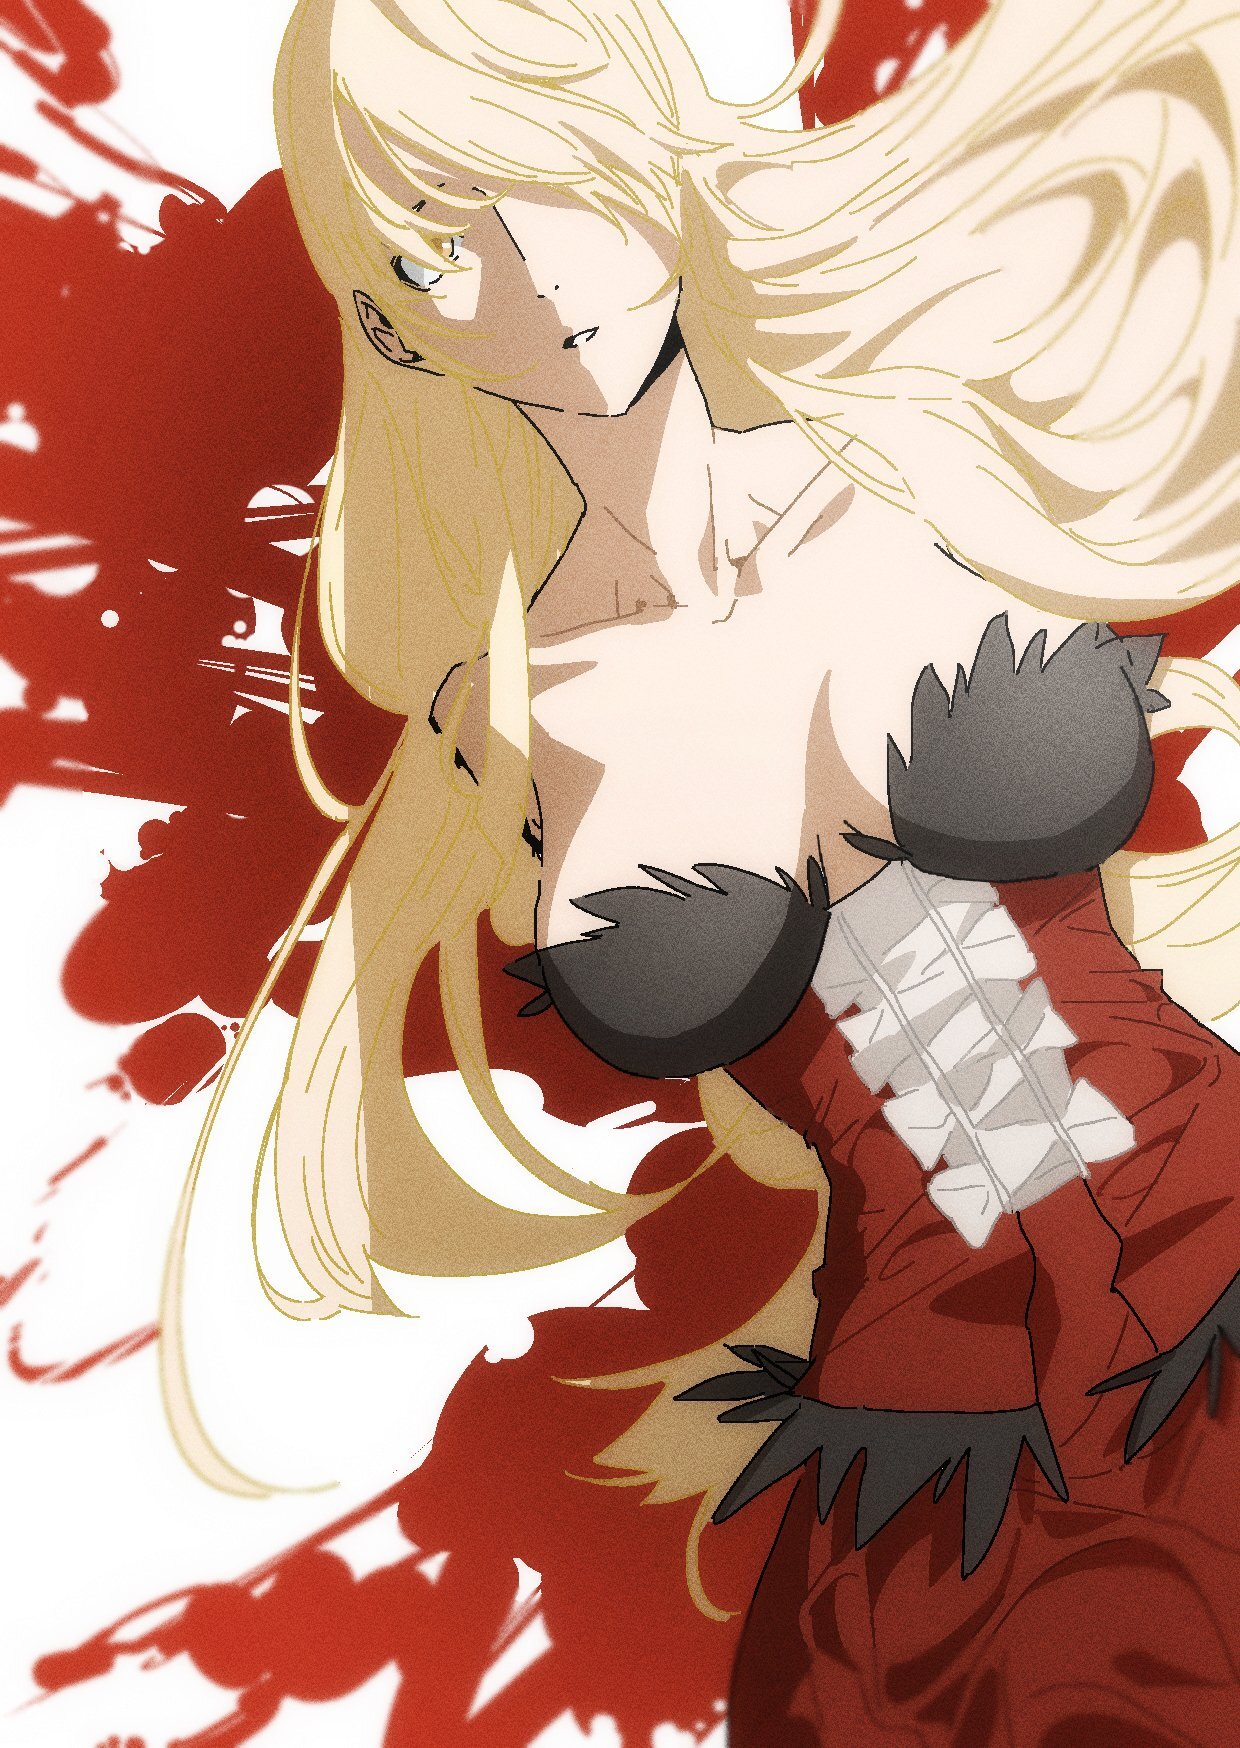 Kissshot! - Art, Anime, Anime art, Monogatari series, Vampires, Kiss-Shot Acerola-orion Heart-under-blade